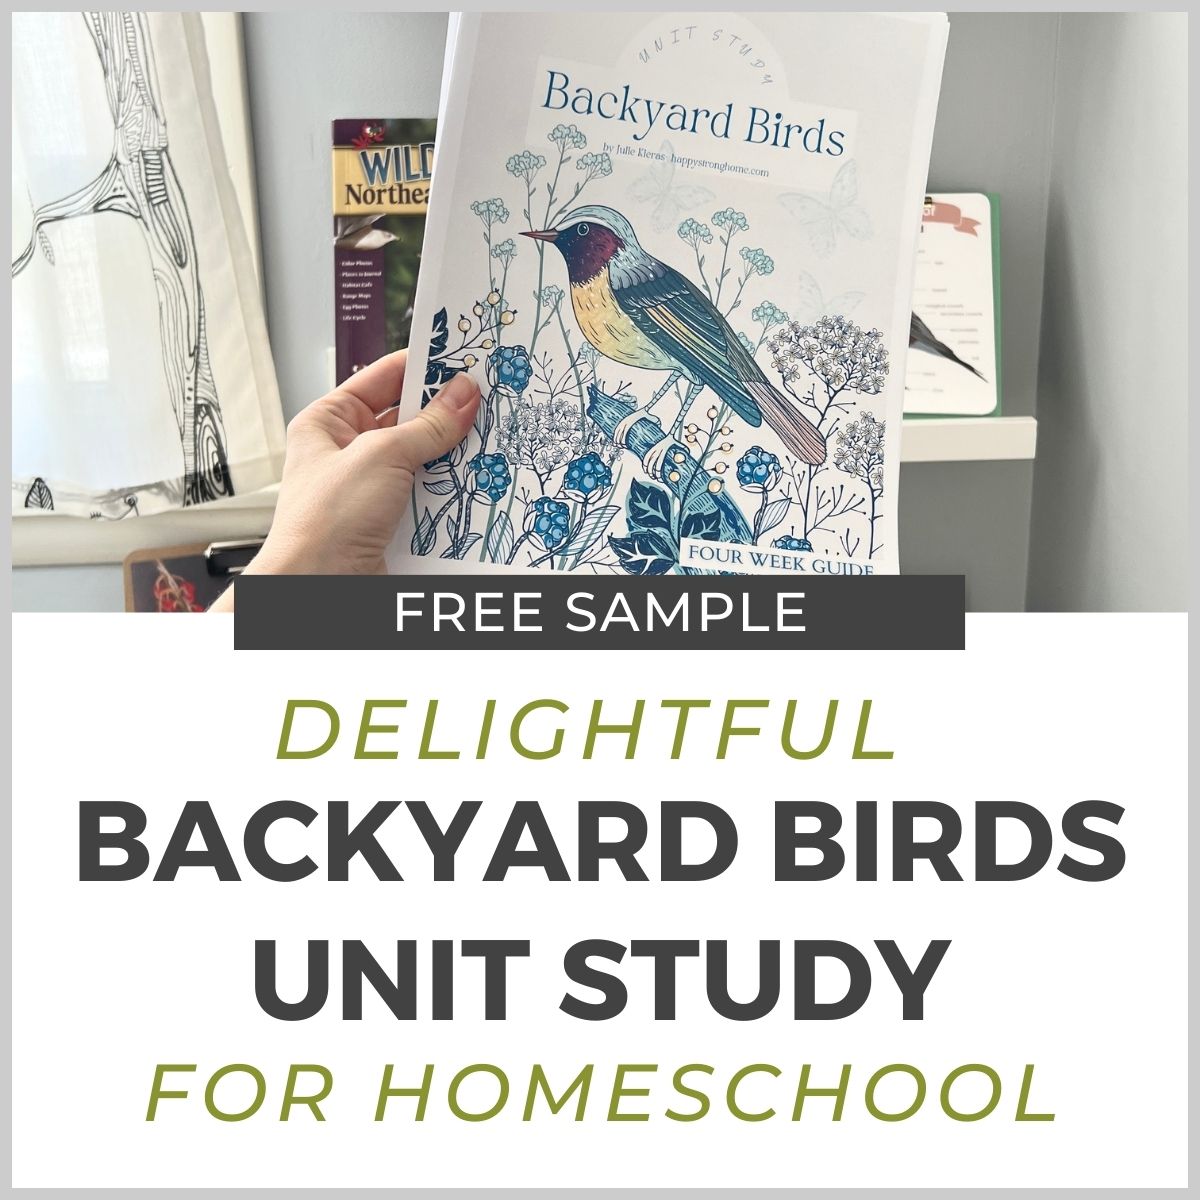 A Homeschool Bird Study with Chalk Pastels - You ARE an ARTiST!